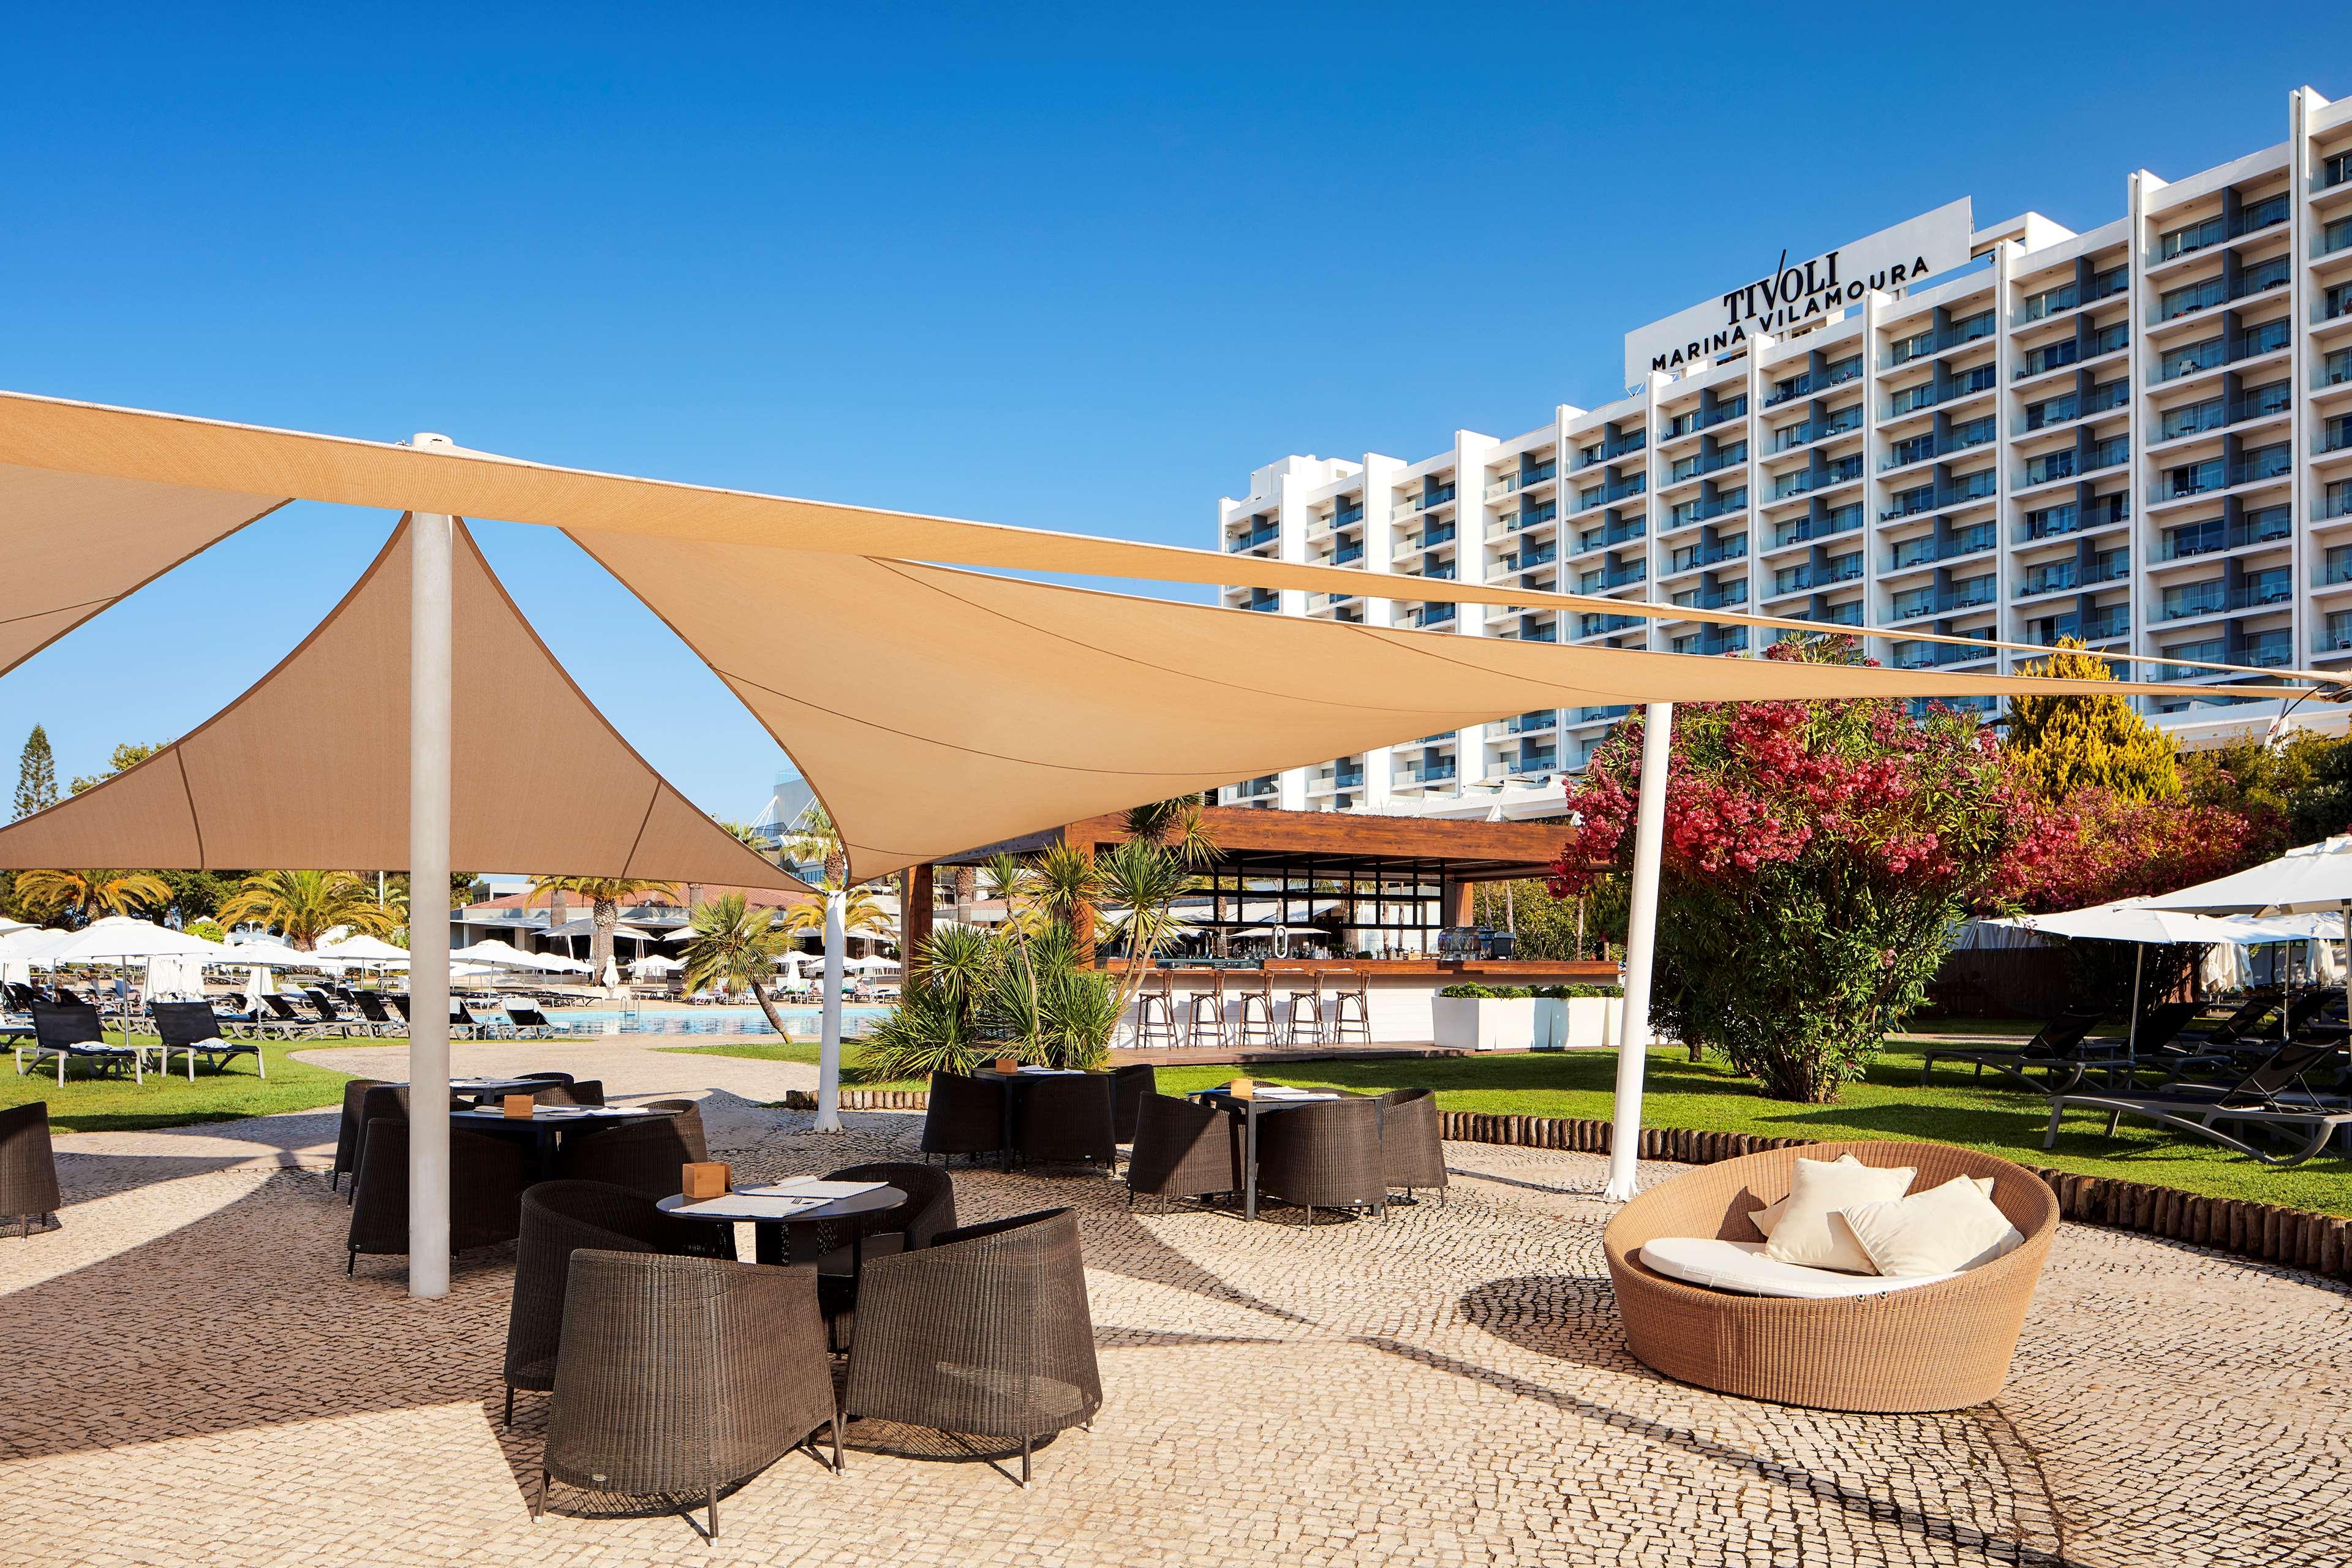 Tivoli Marina Vilamoura Algarve Resort image